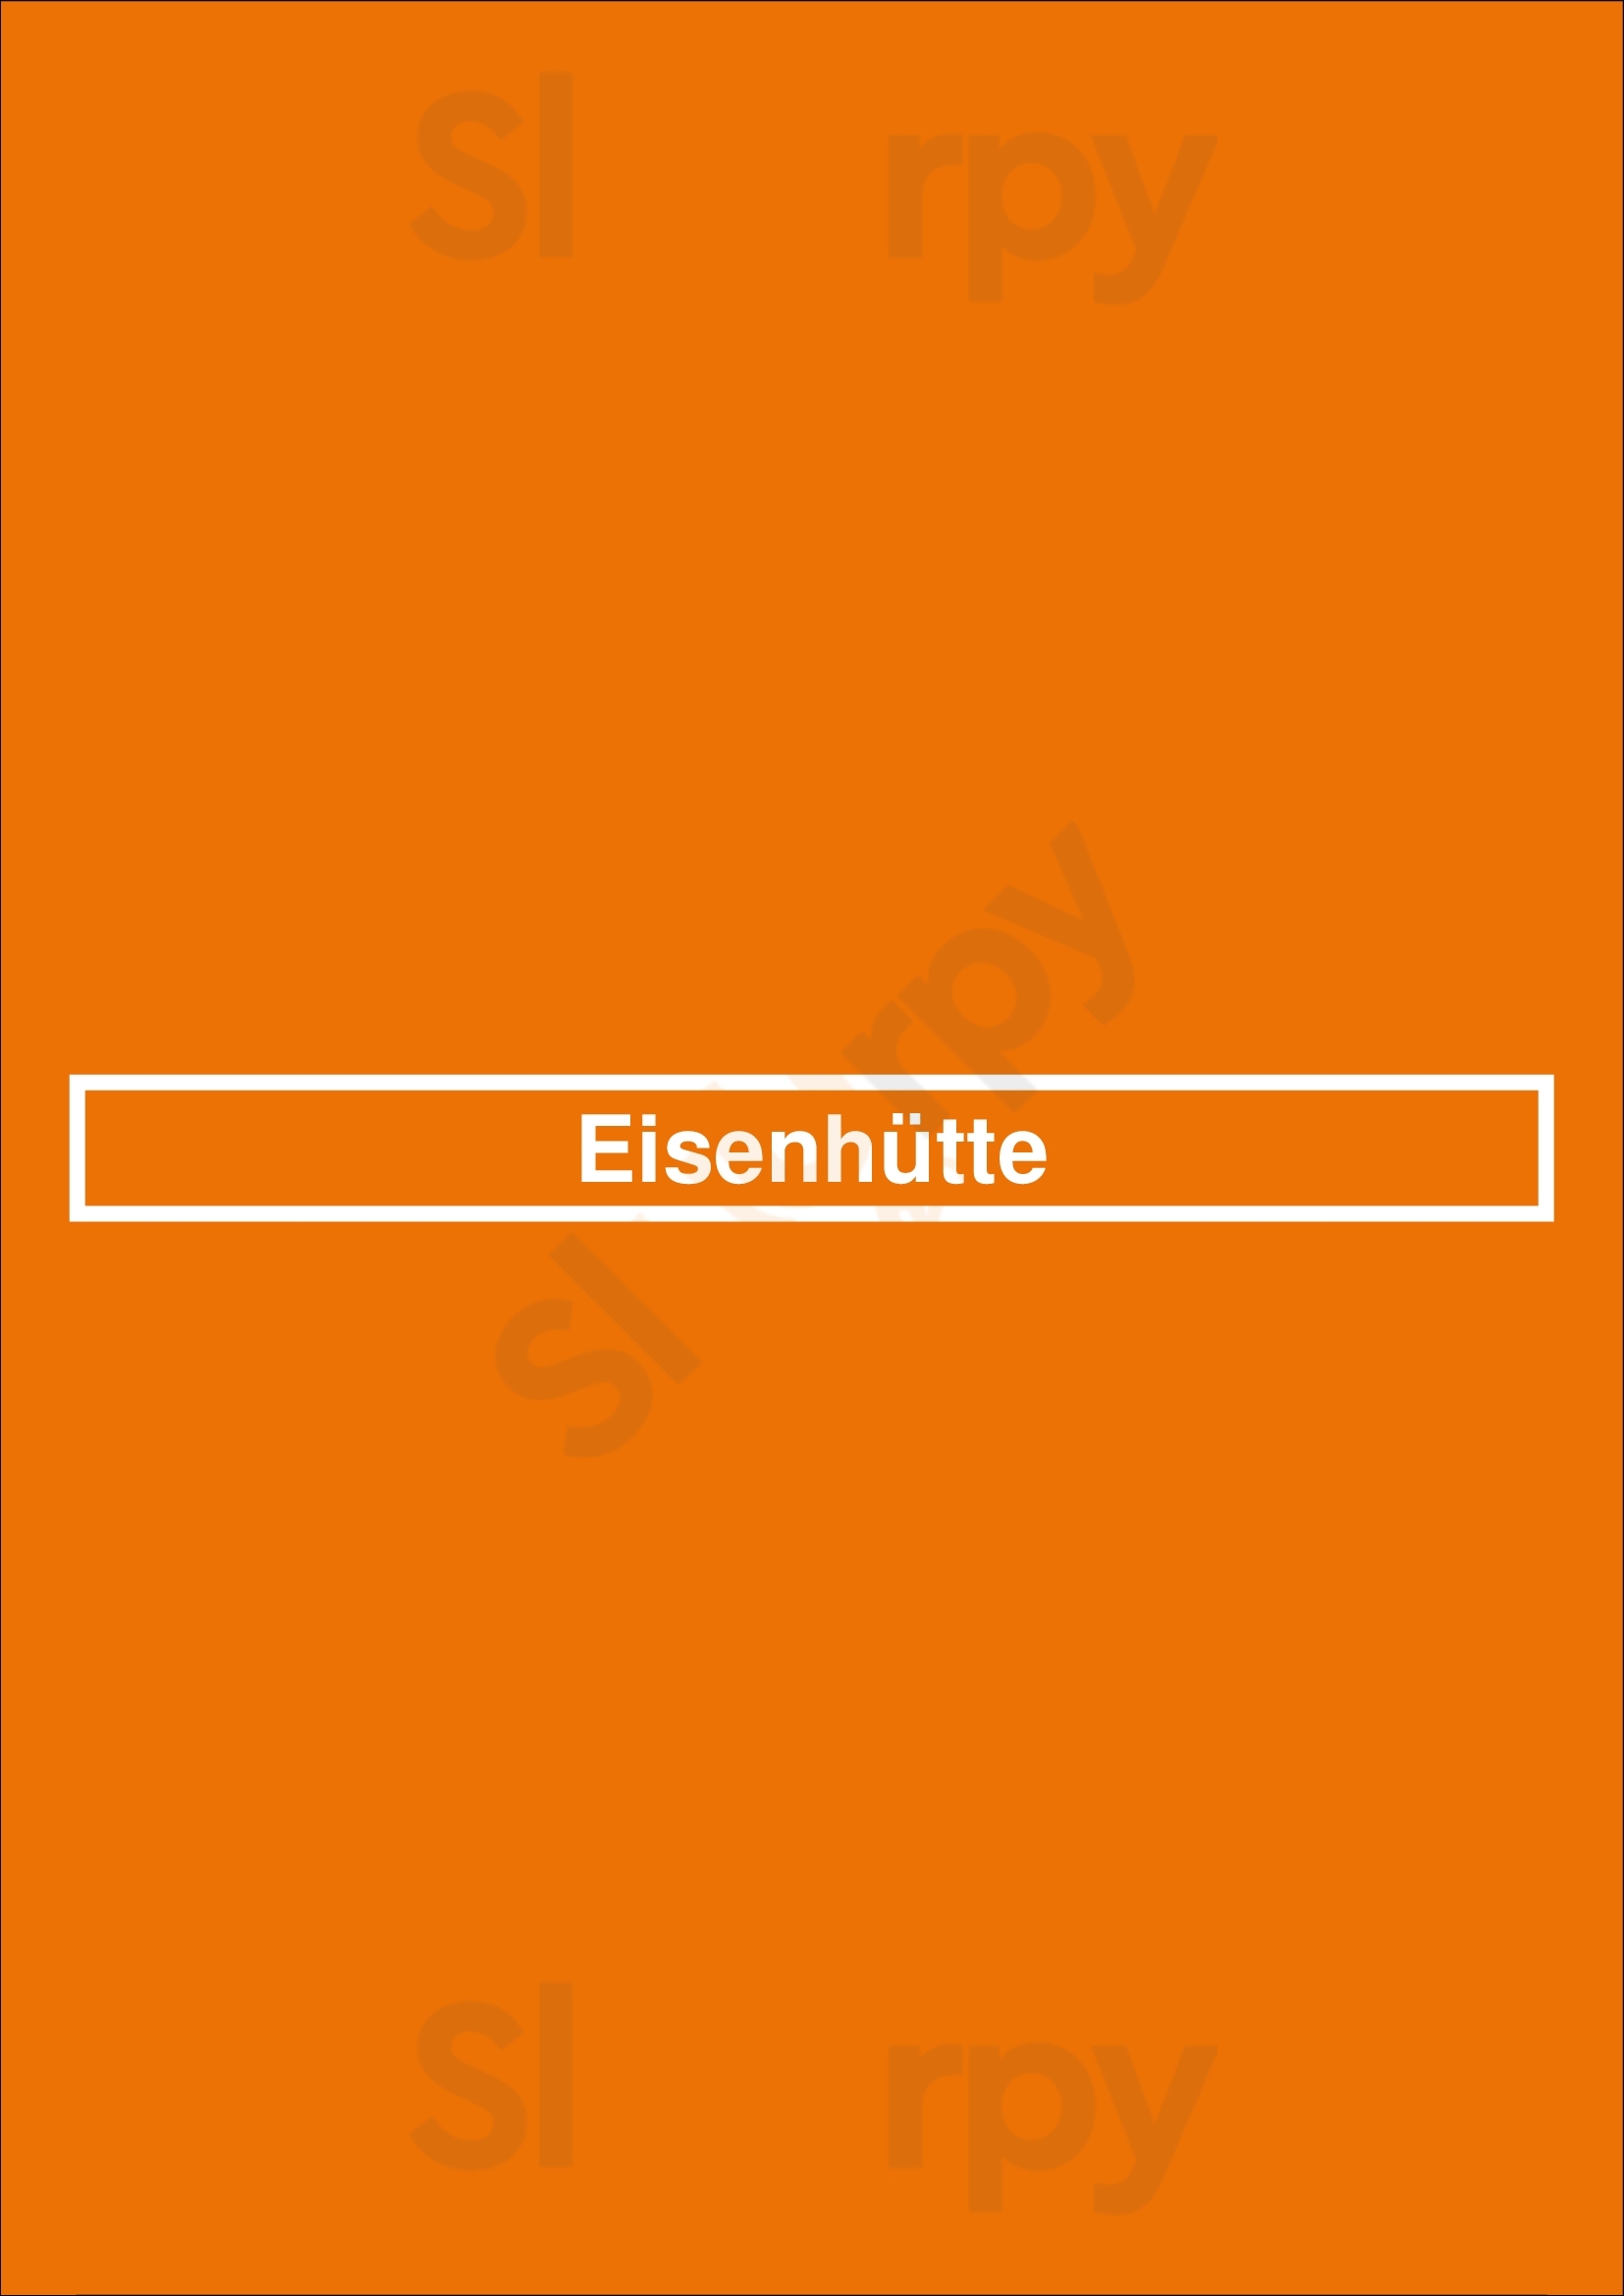 Eisenhütte Augustfehn Menu - 1